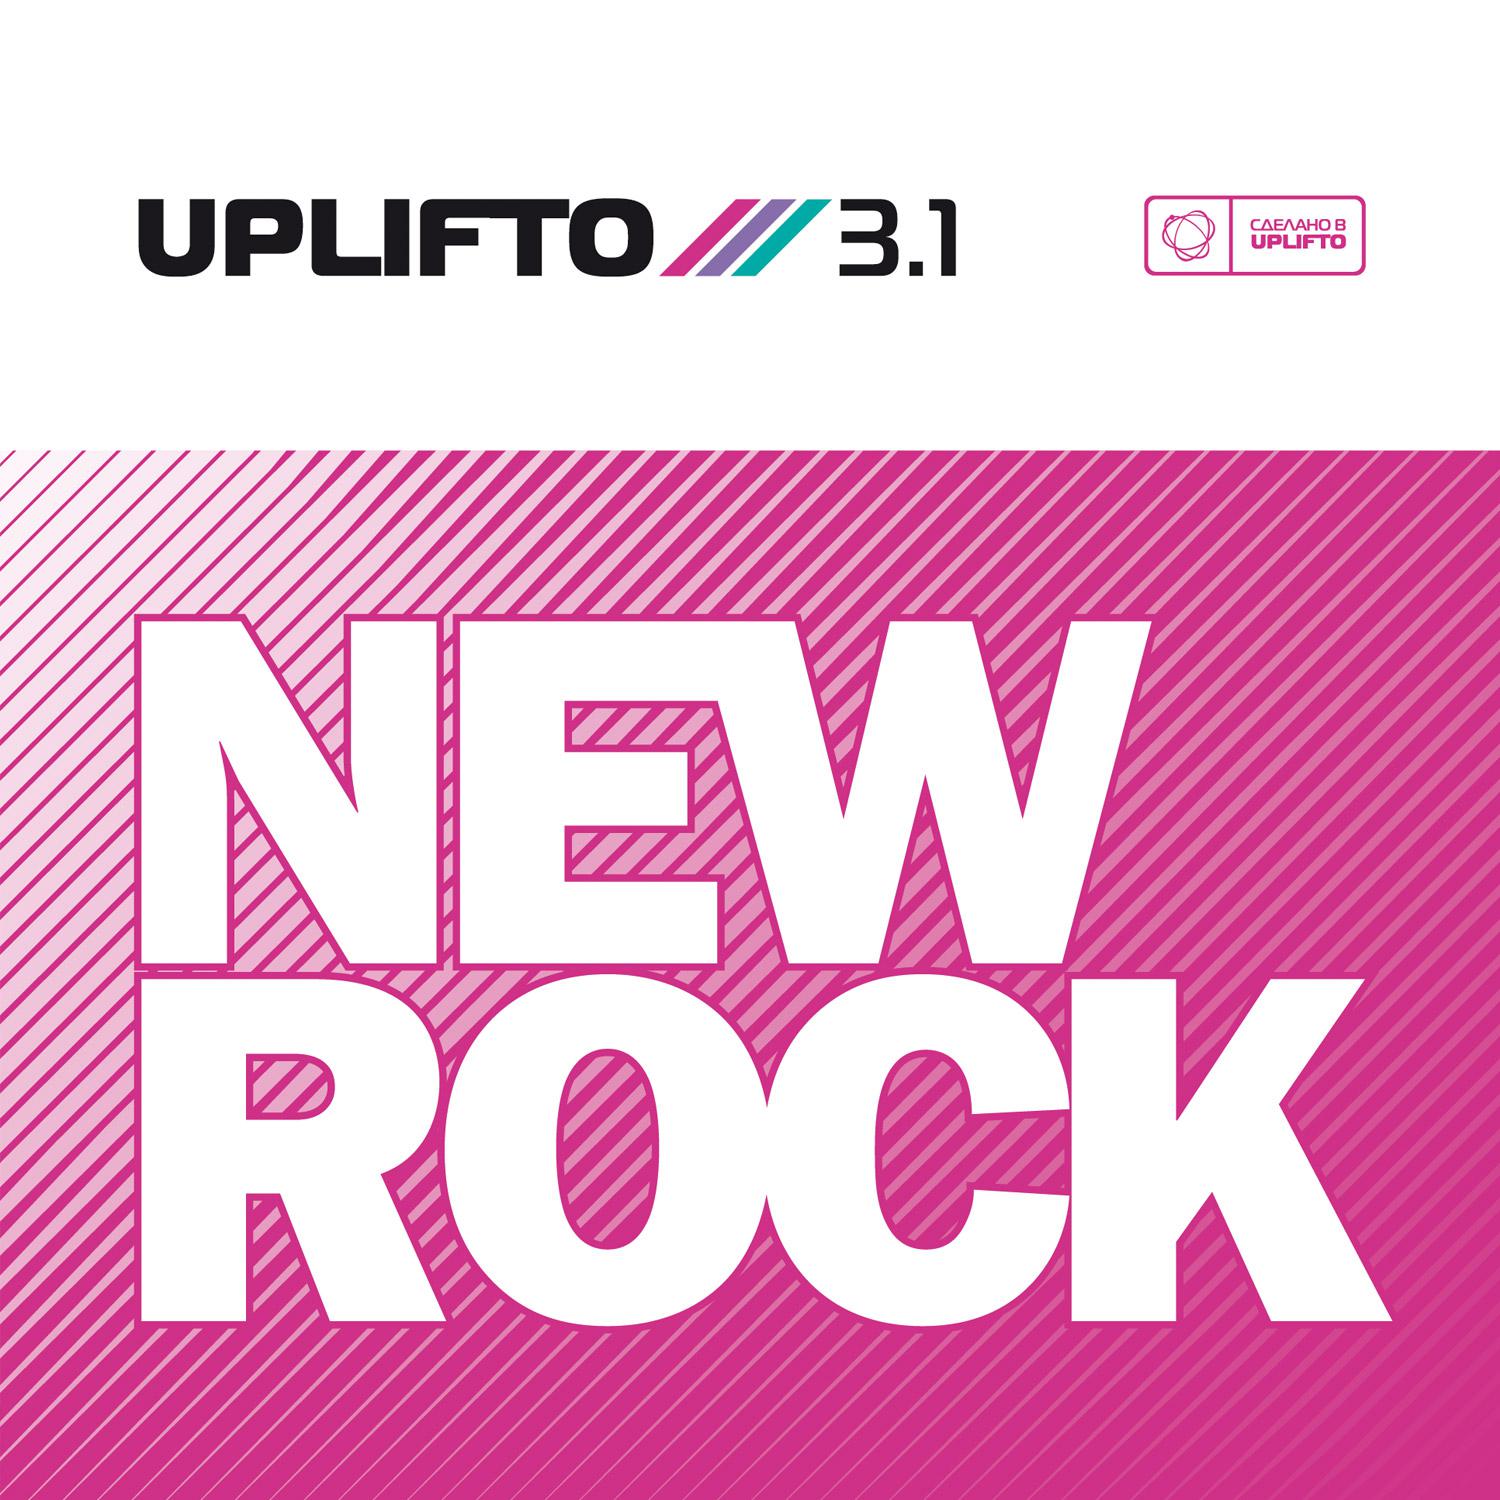 Uplifto 3.1 / New rock